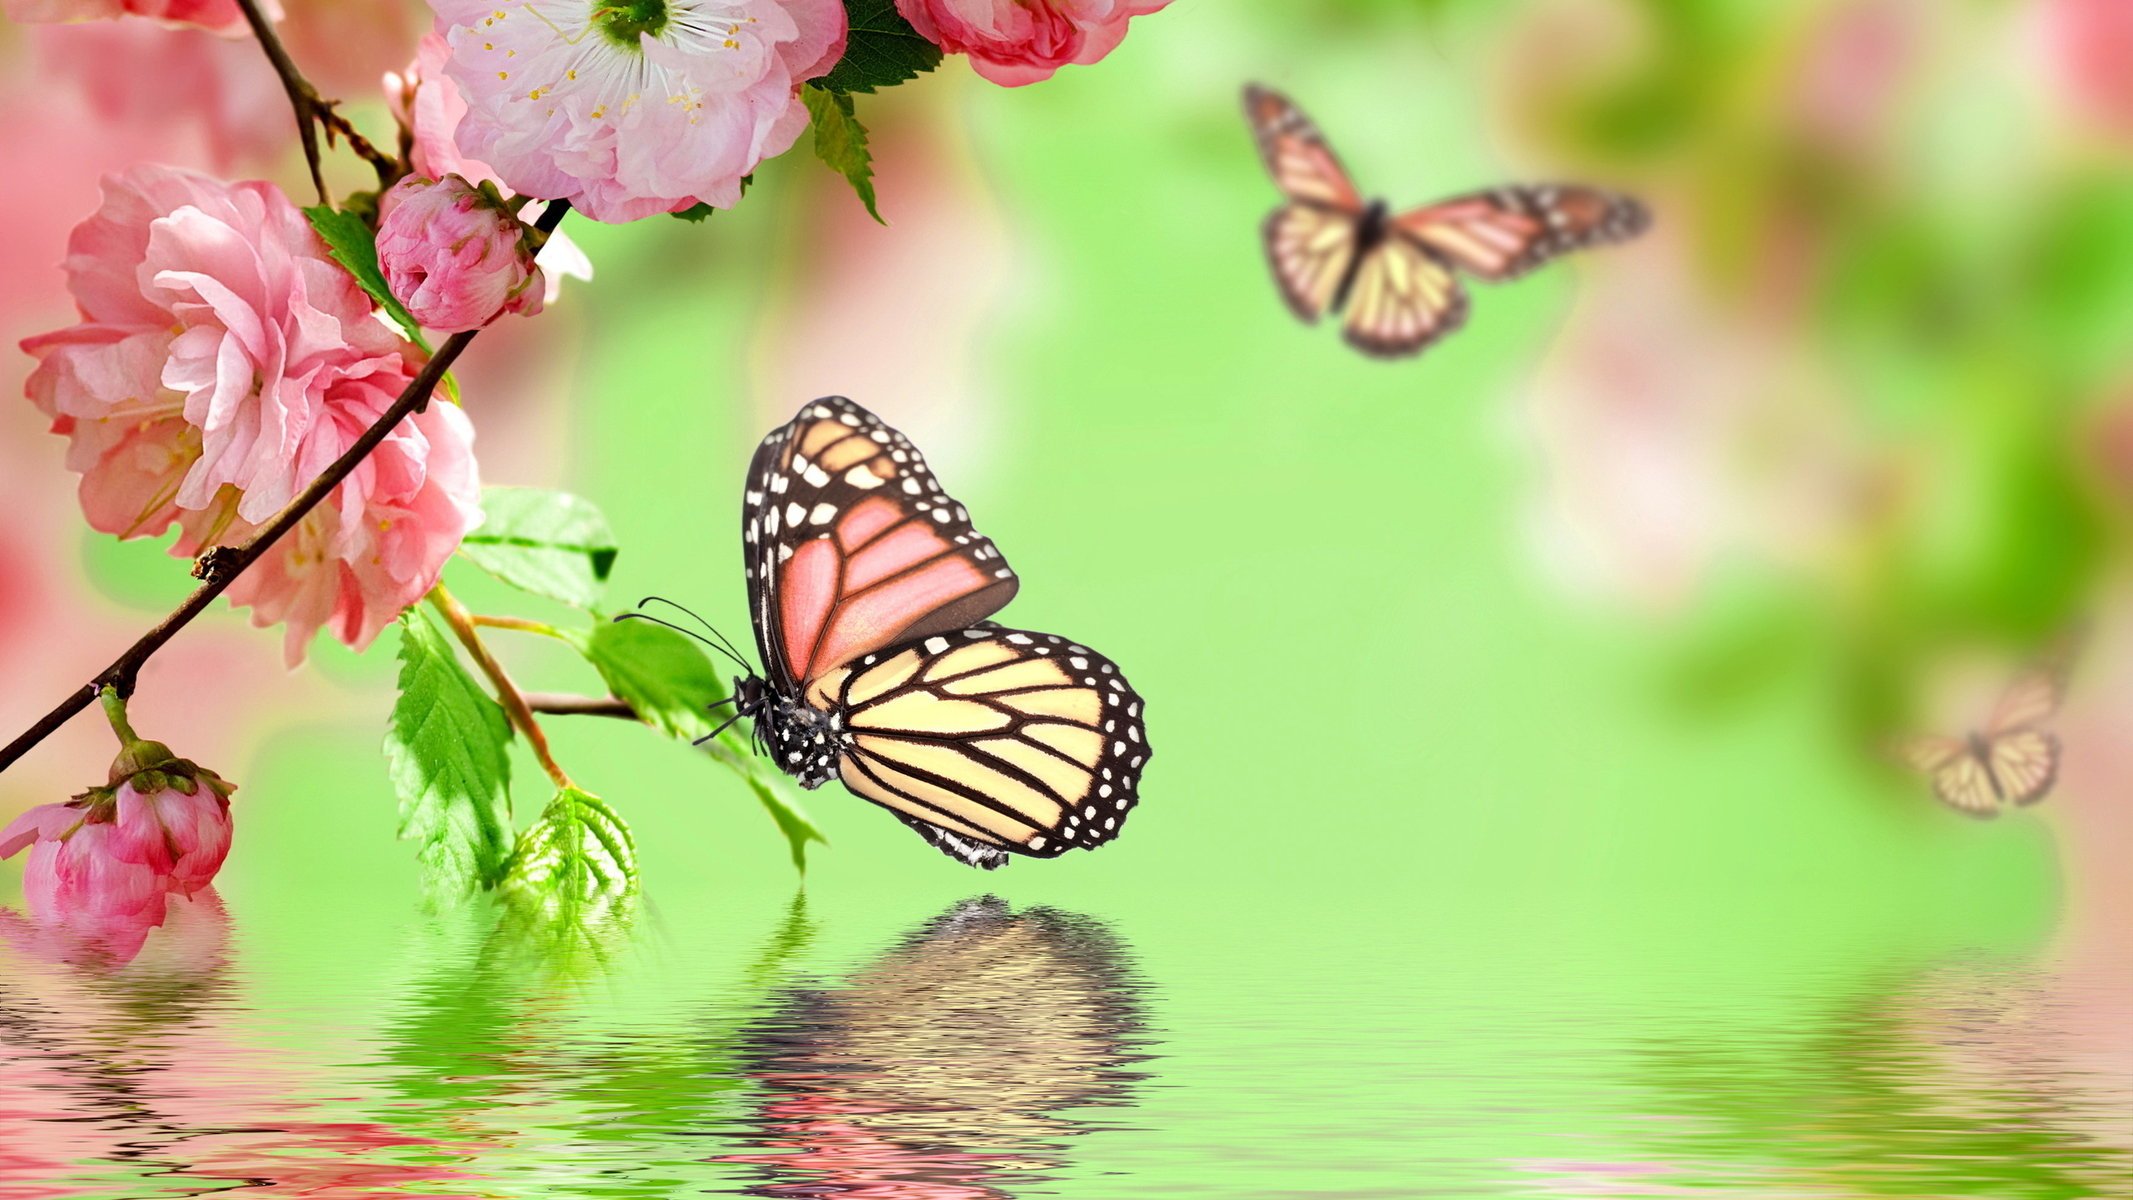 Бабочки и ветка сакуры над водой на зеленом фоне